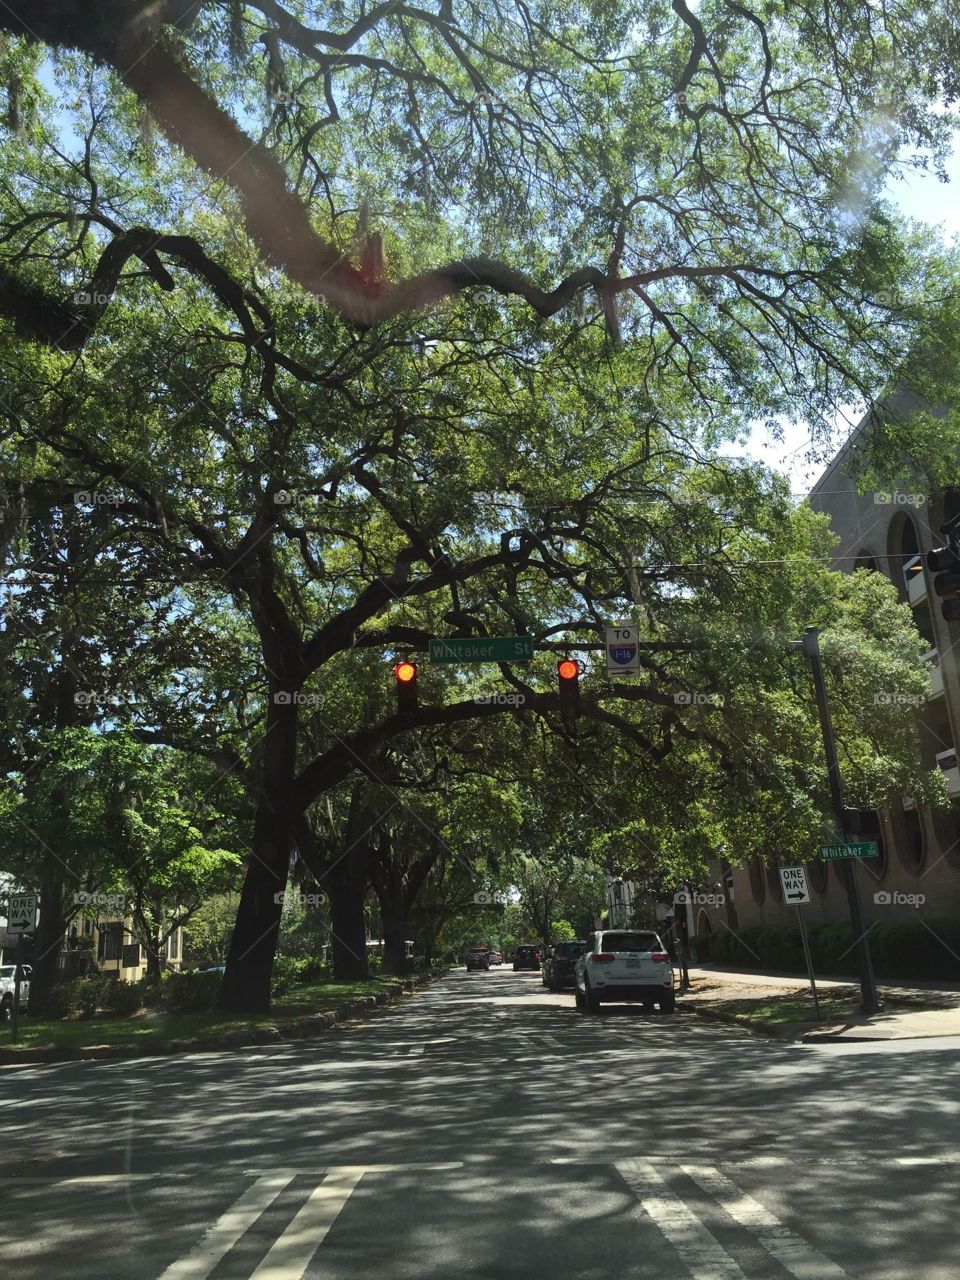 Trees in Savannah GA